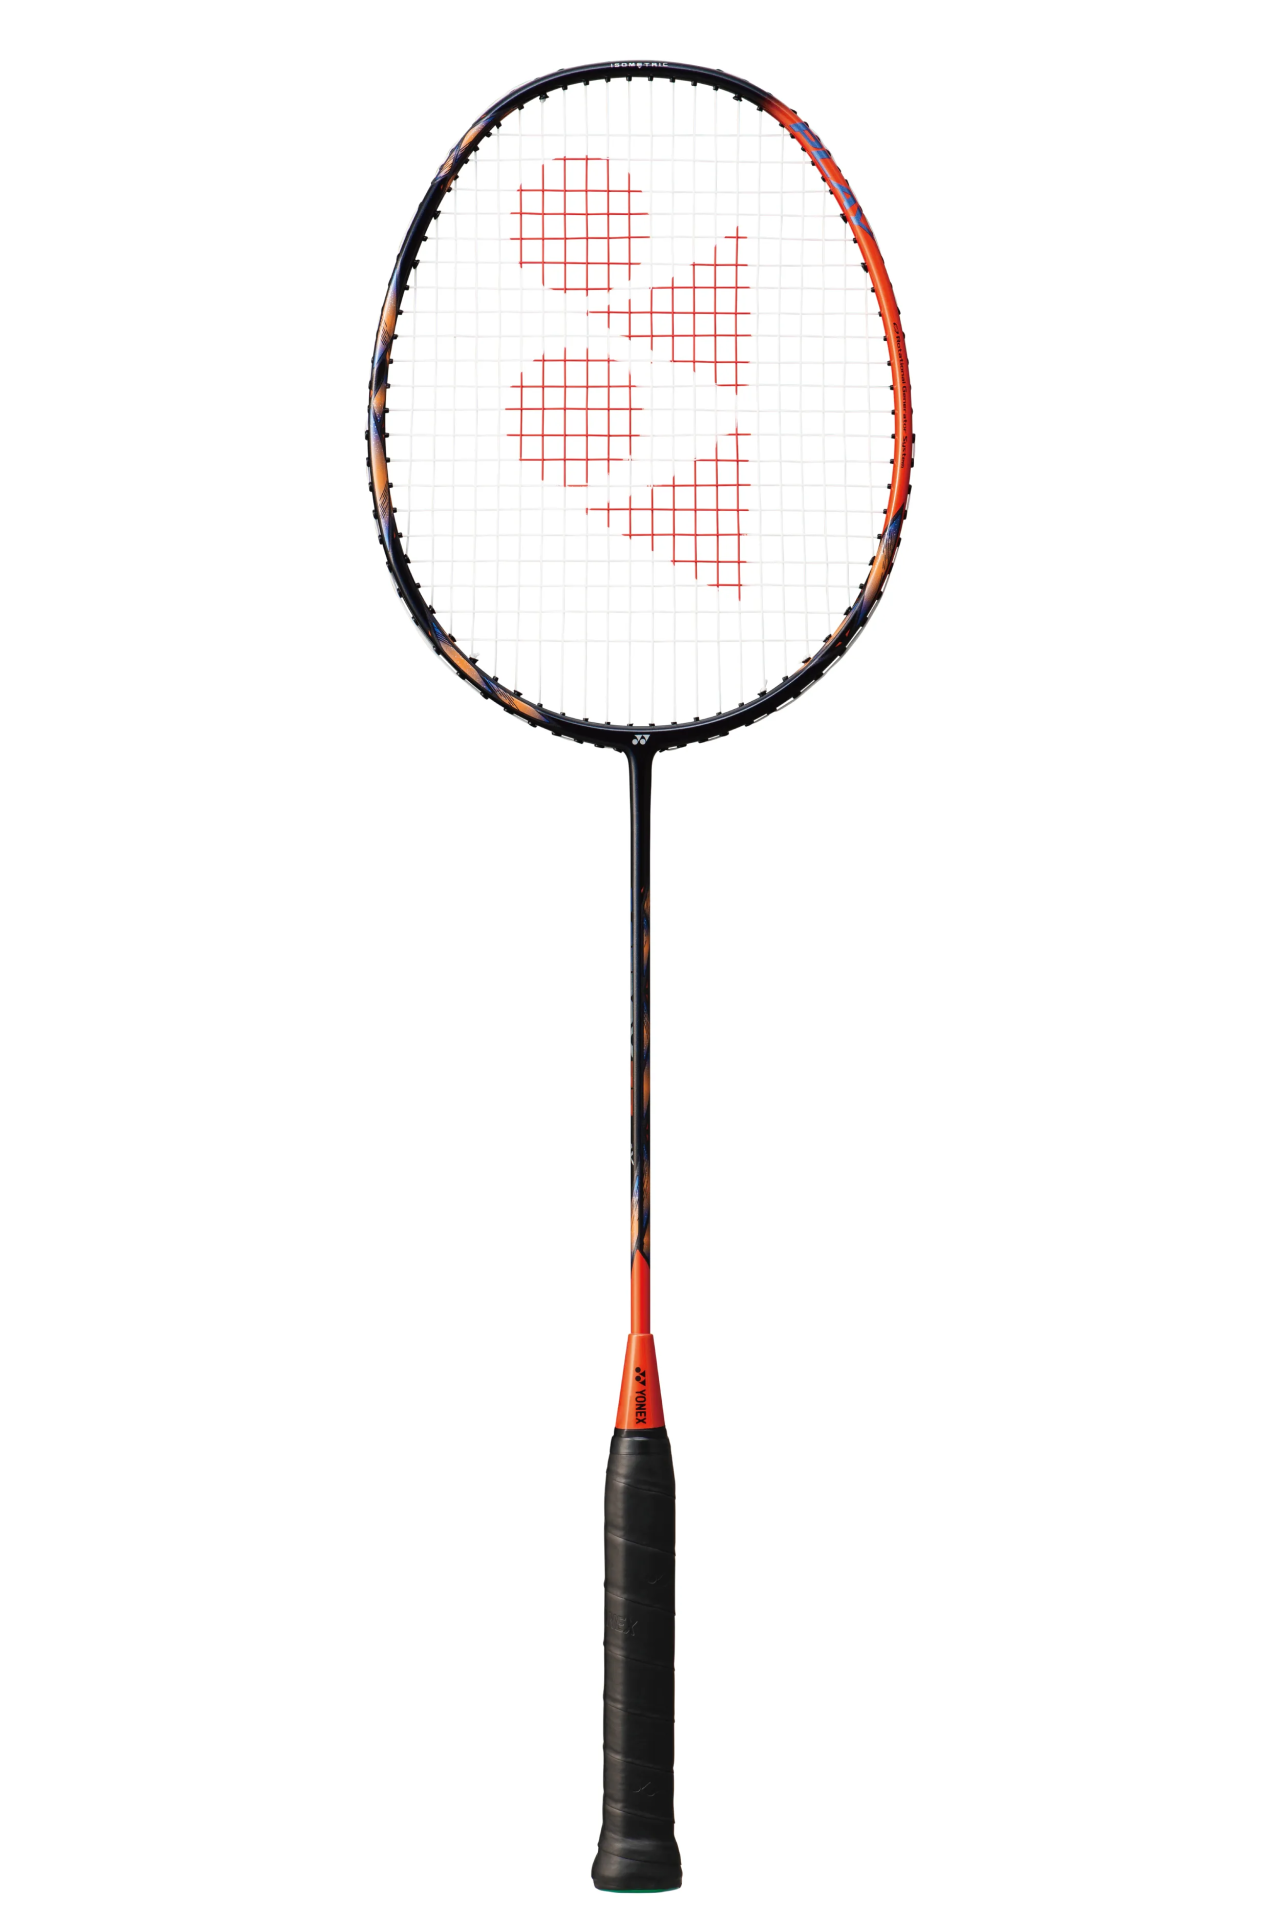 Astrox 77 Play (83g / 4Ug5)  Badminton Raketi - Turuncu | Yonex